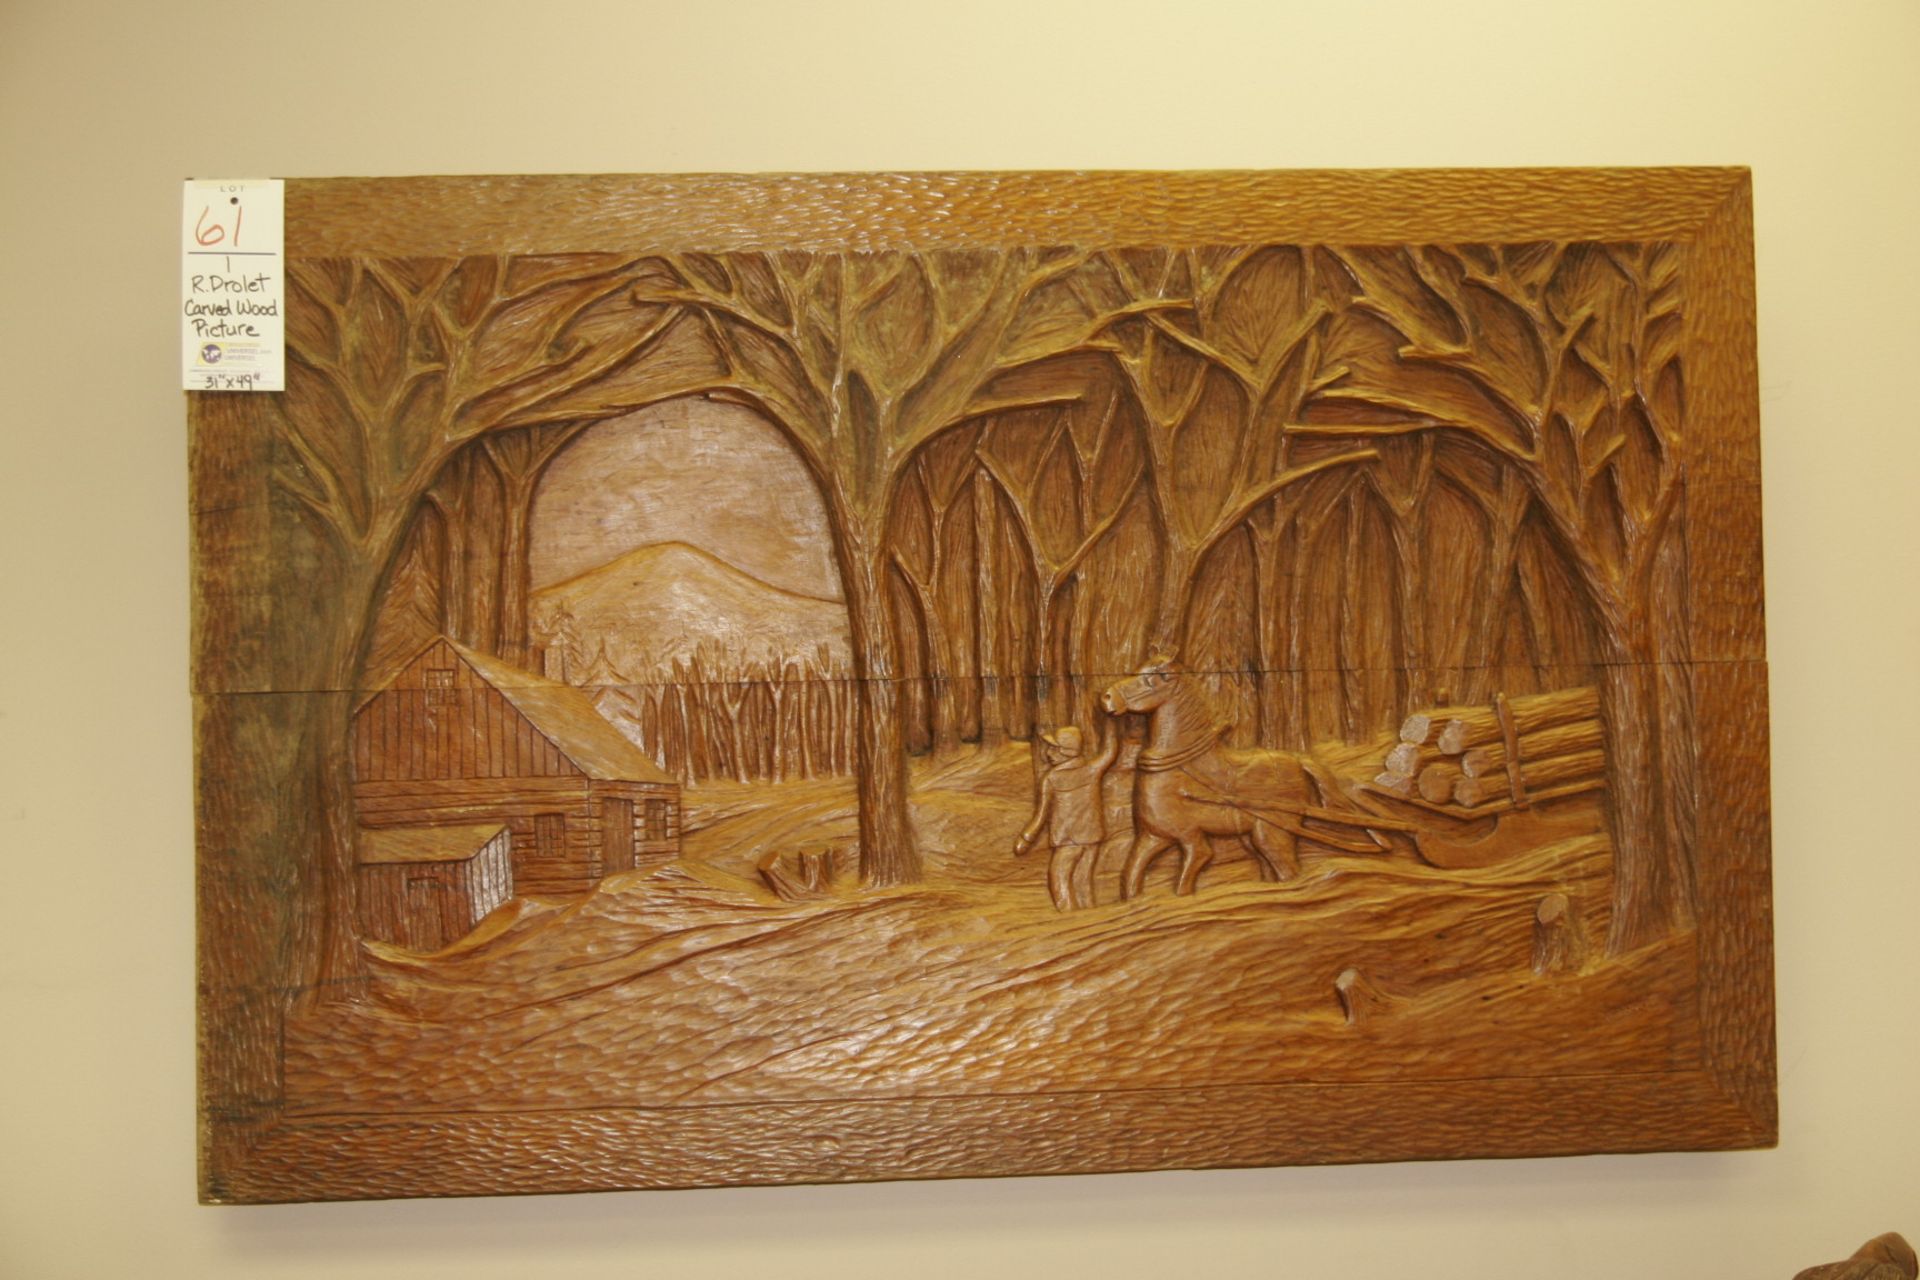 R.Drolet Carved Wood 31"x49"